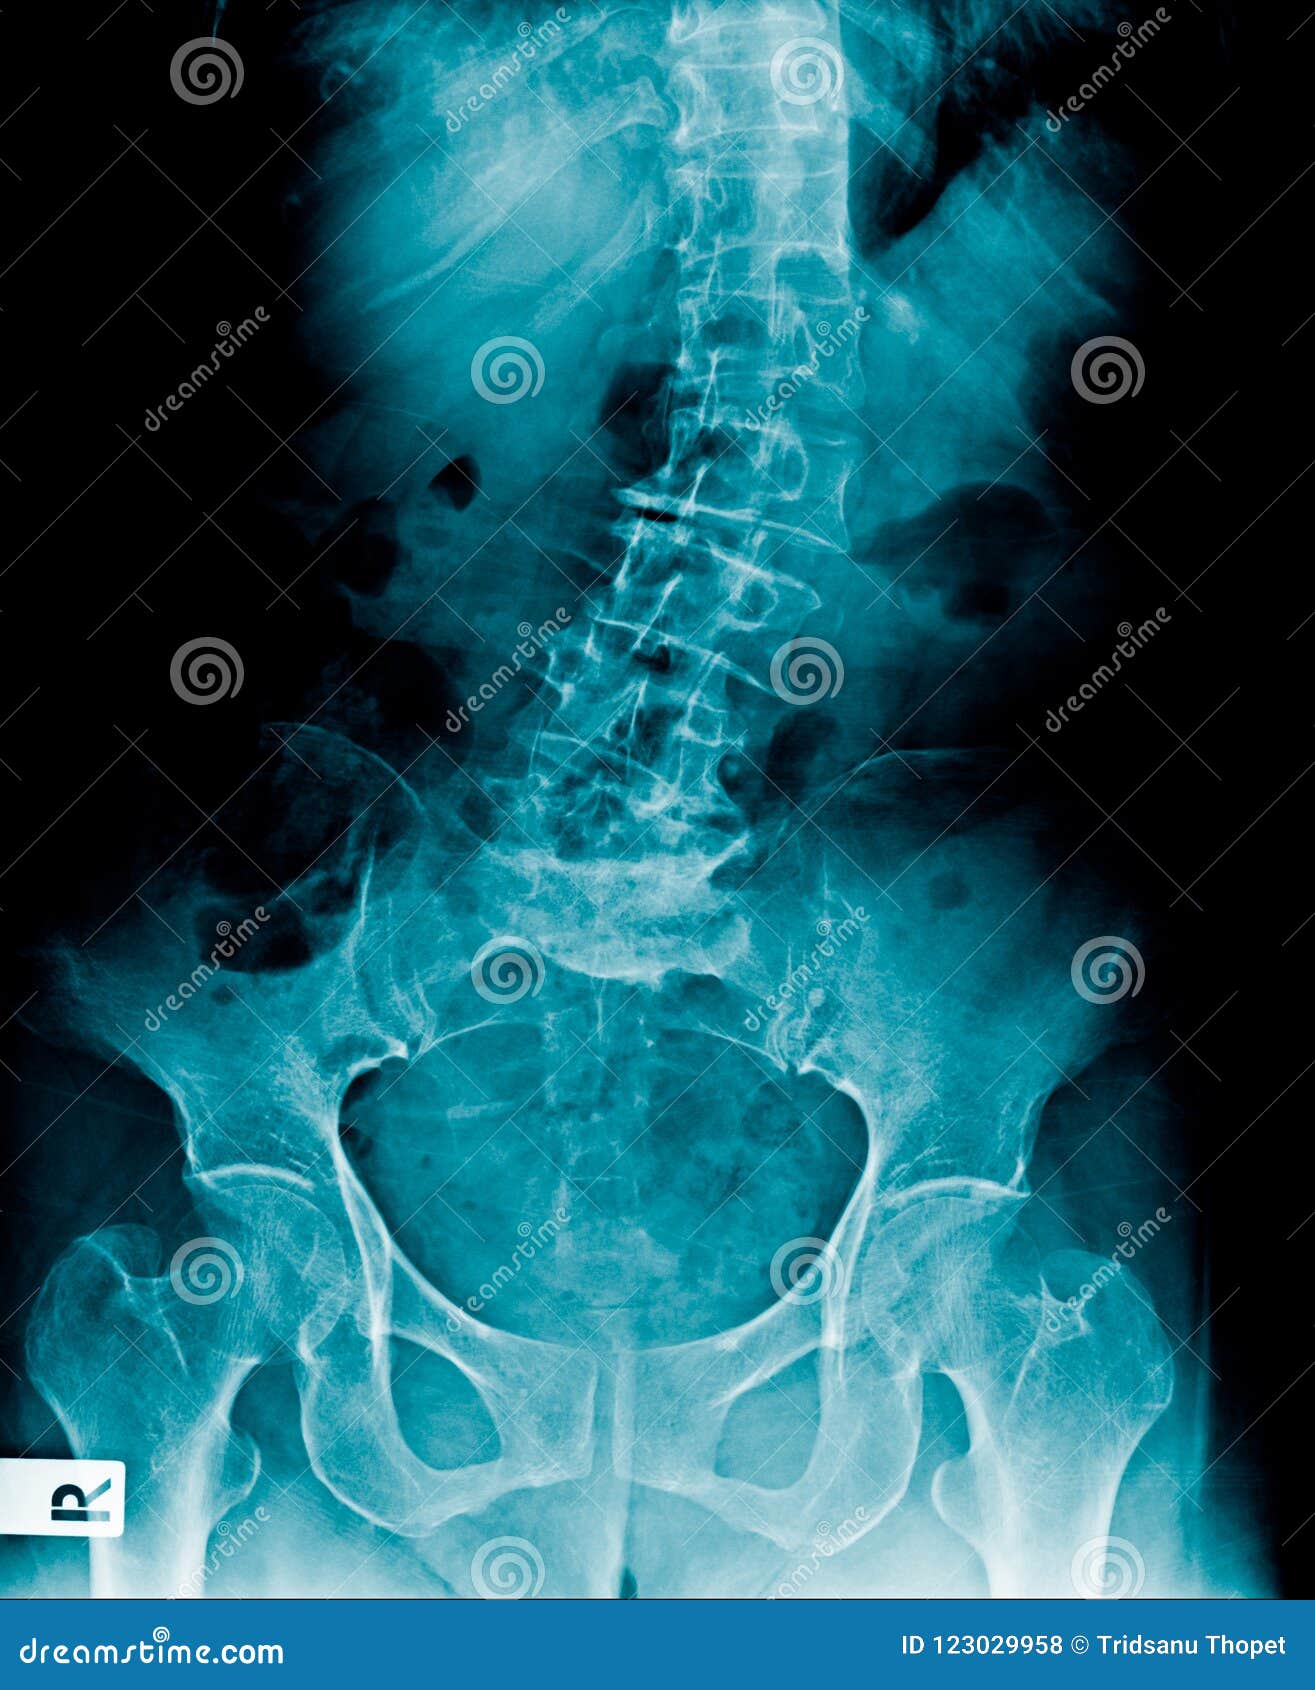 scoliosis lumbar x-ray image